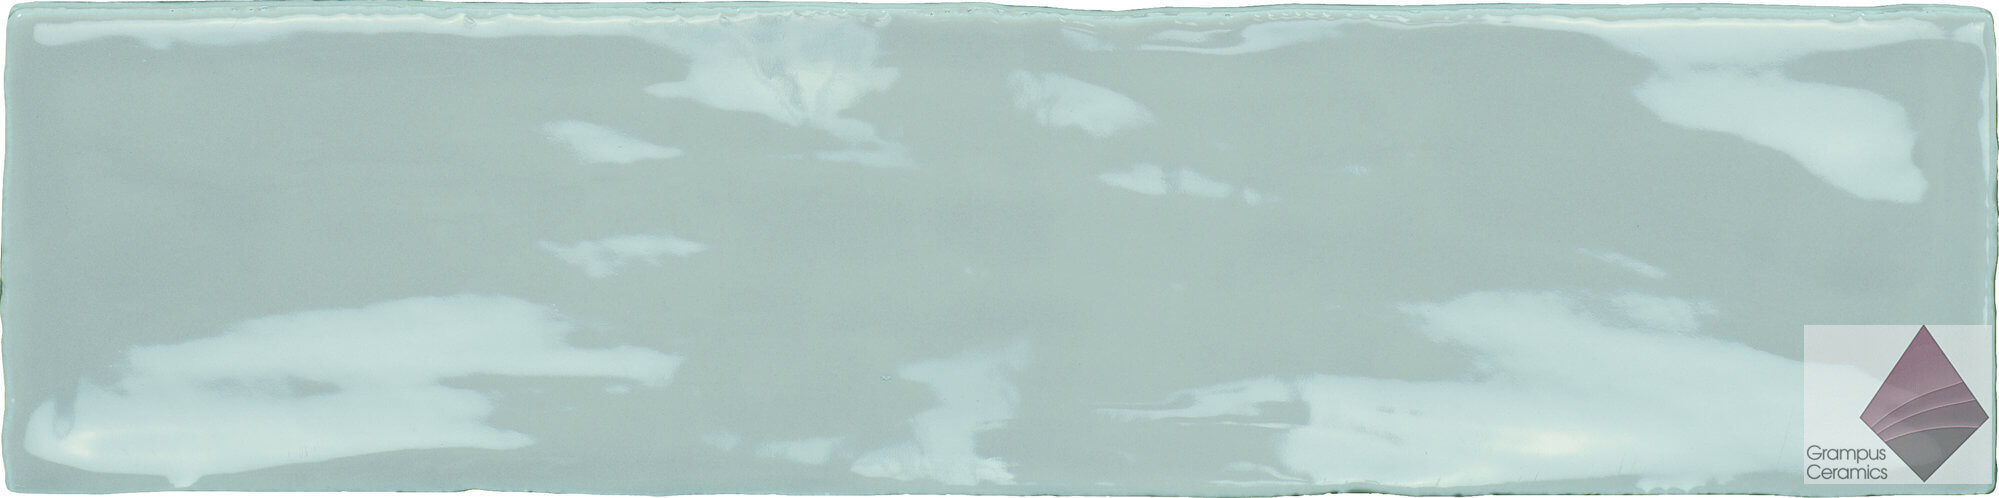 Настенная глянцевая зеленая плитка под кирпич Harmony Poitiers Mint 7.5x30